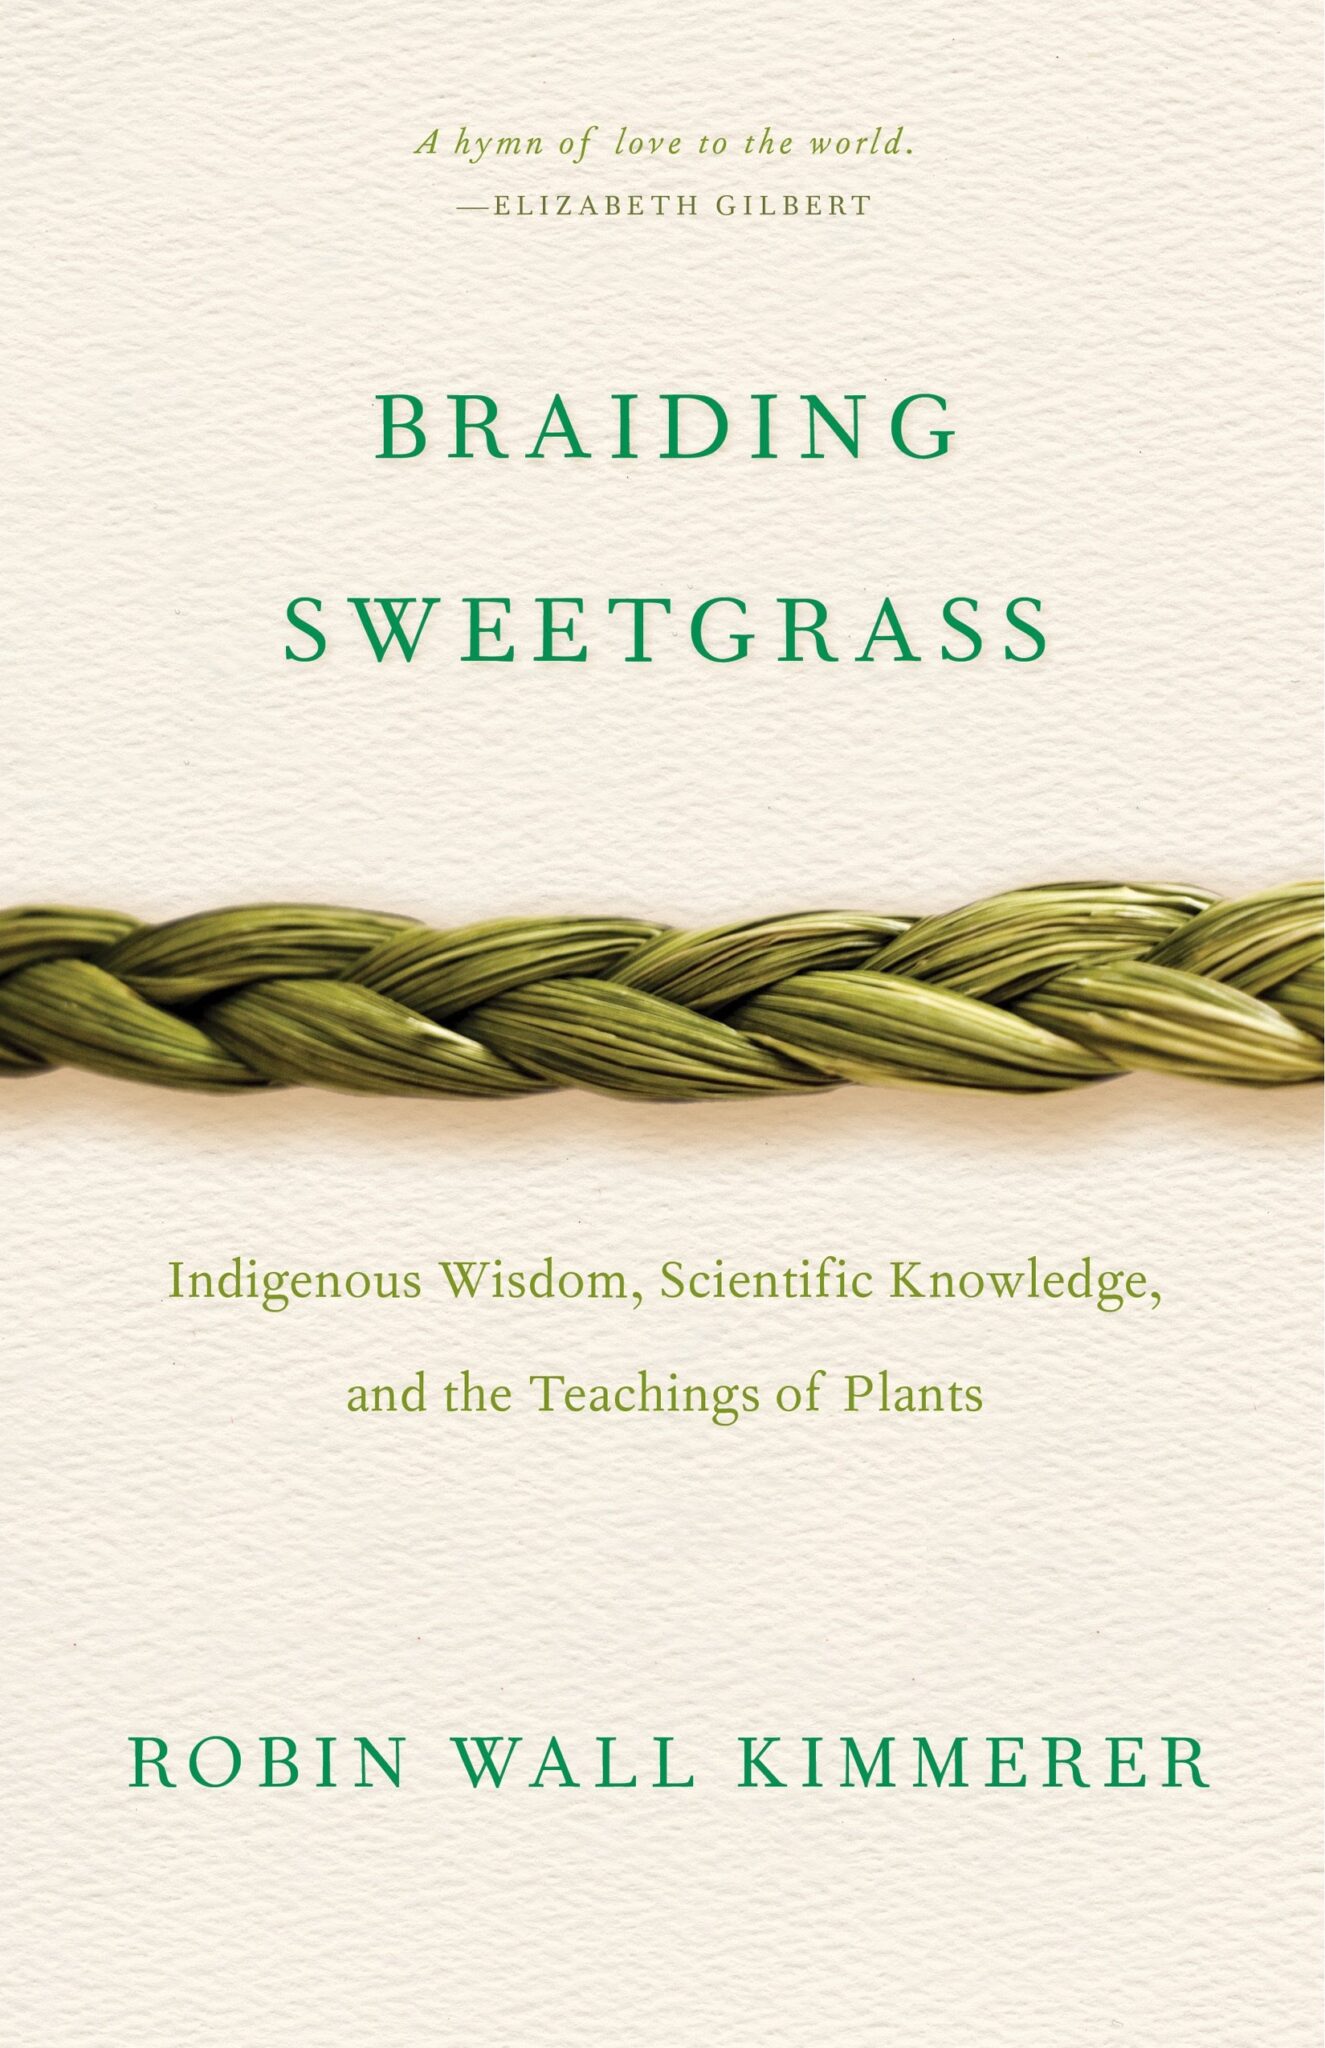 sweetgrass braiding